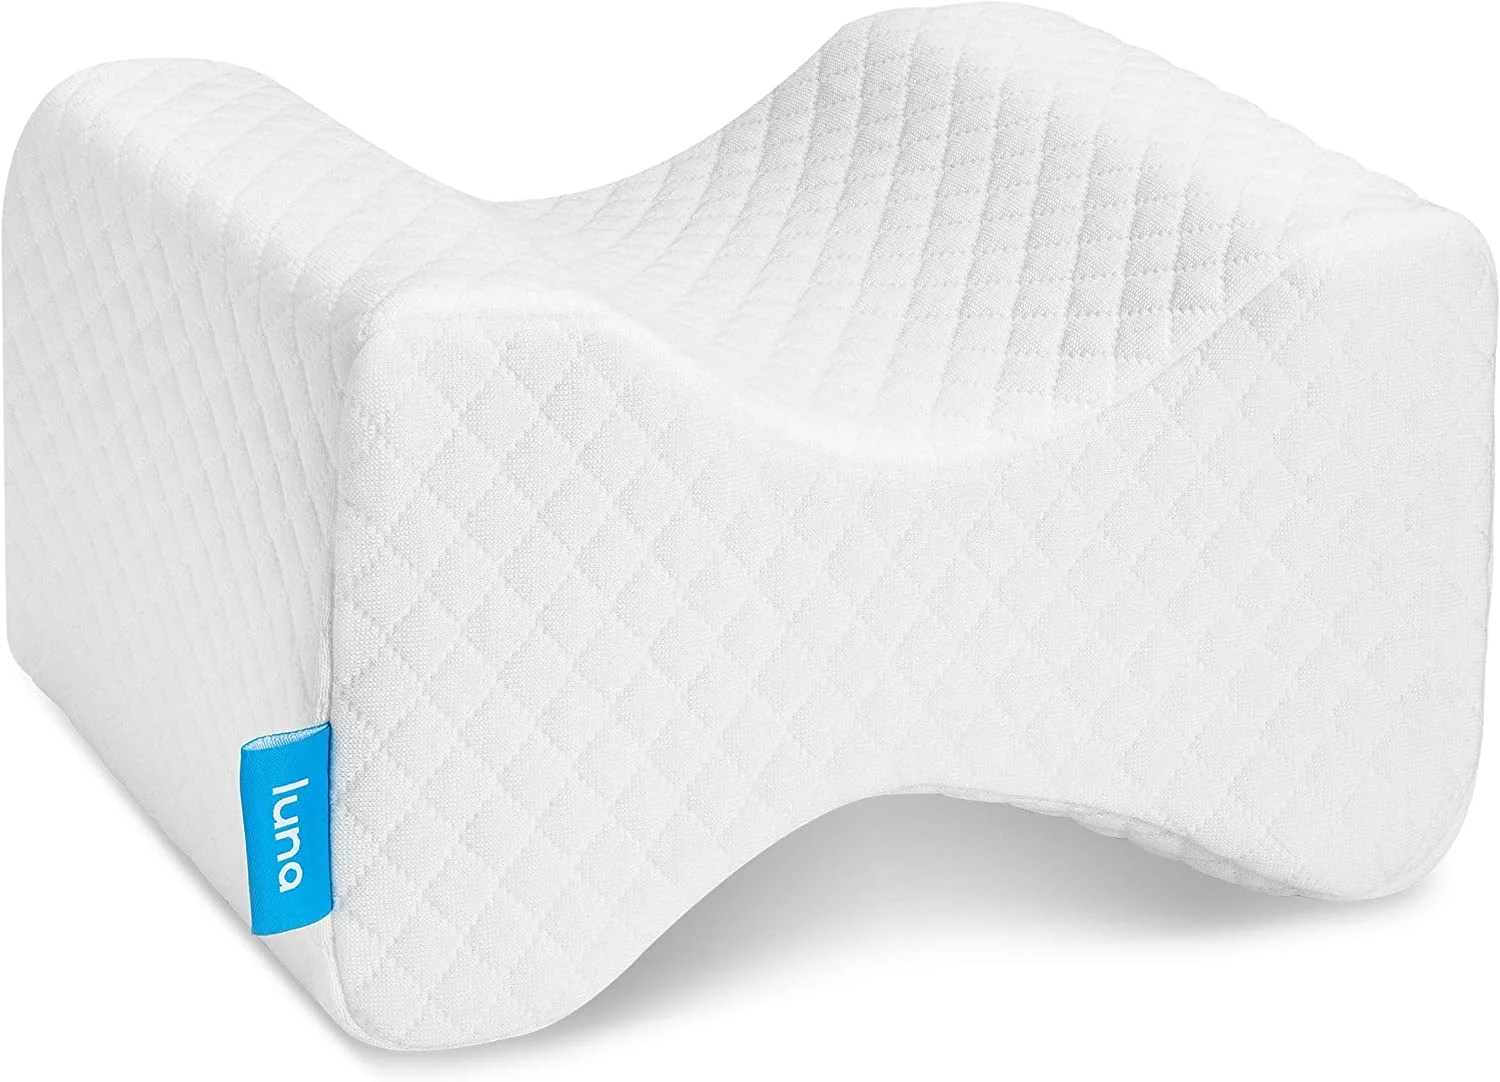 Sleep Yoga Knee Pillow